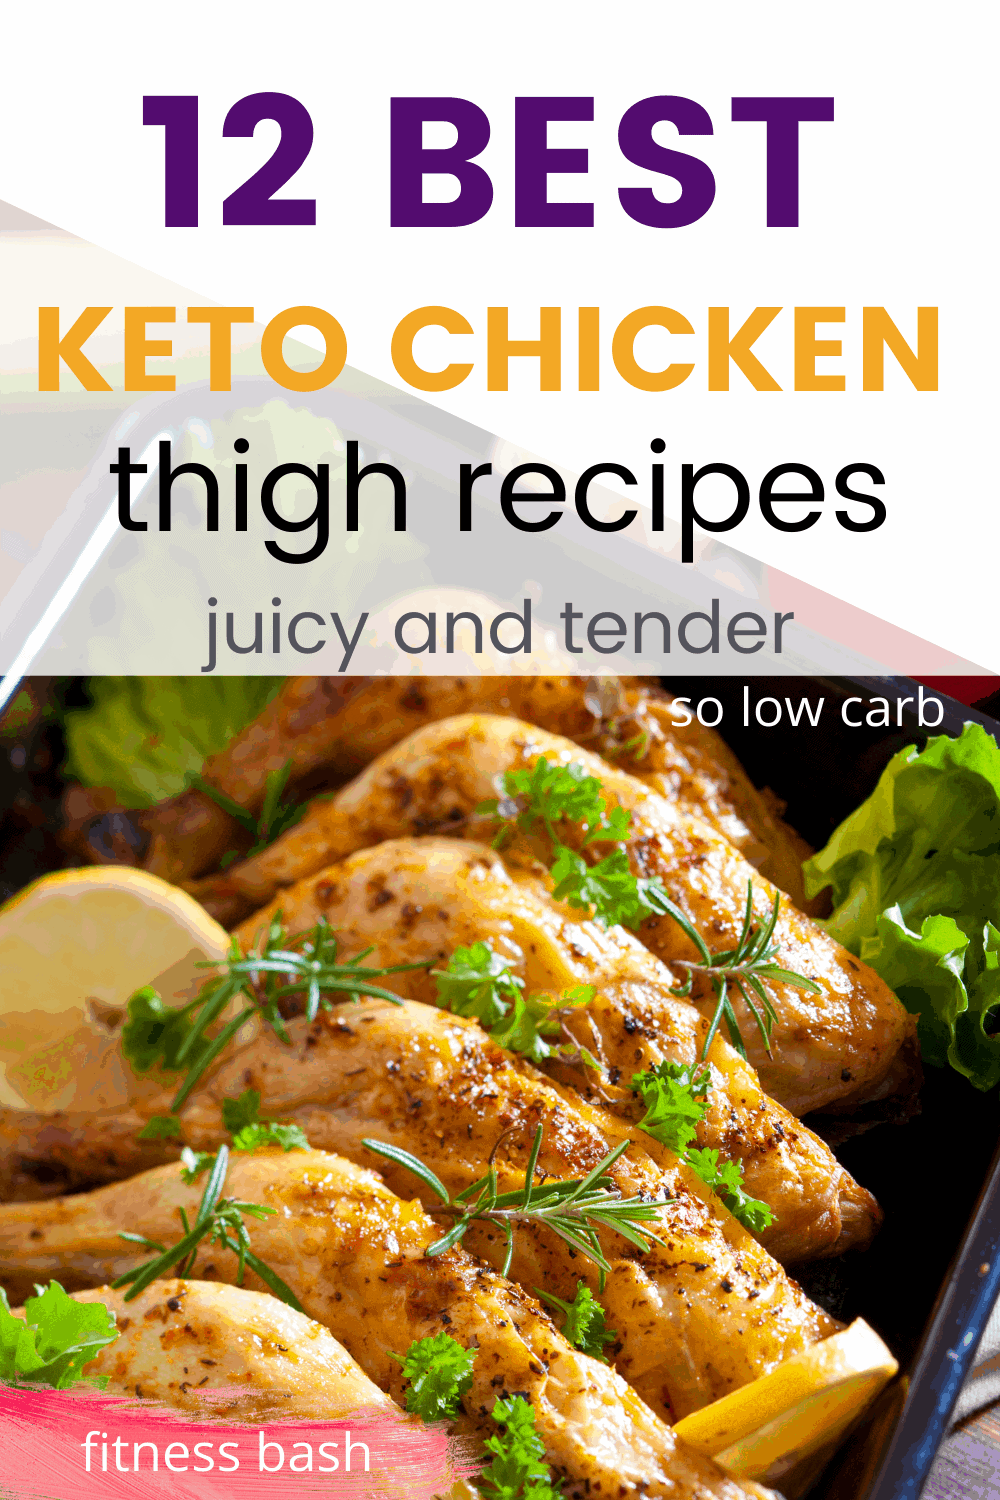 keto chicken thigh recipes (1)